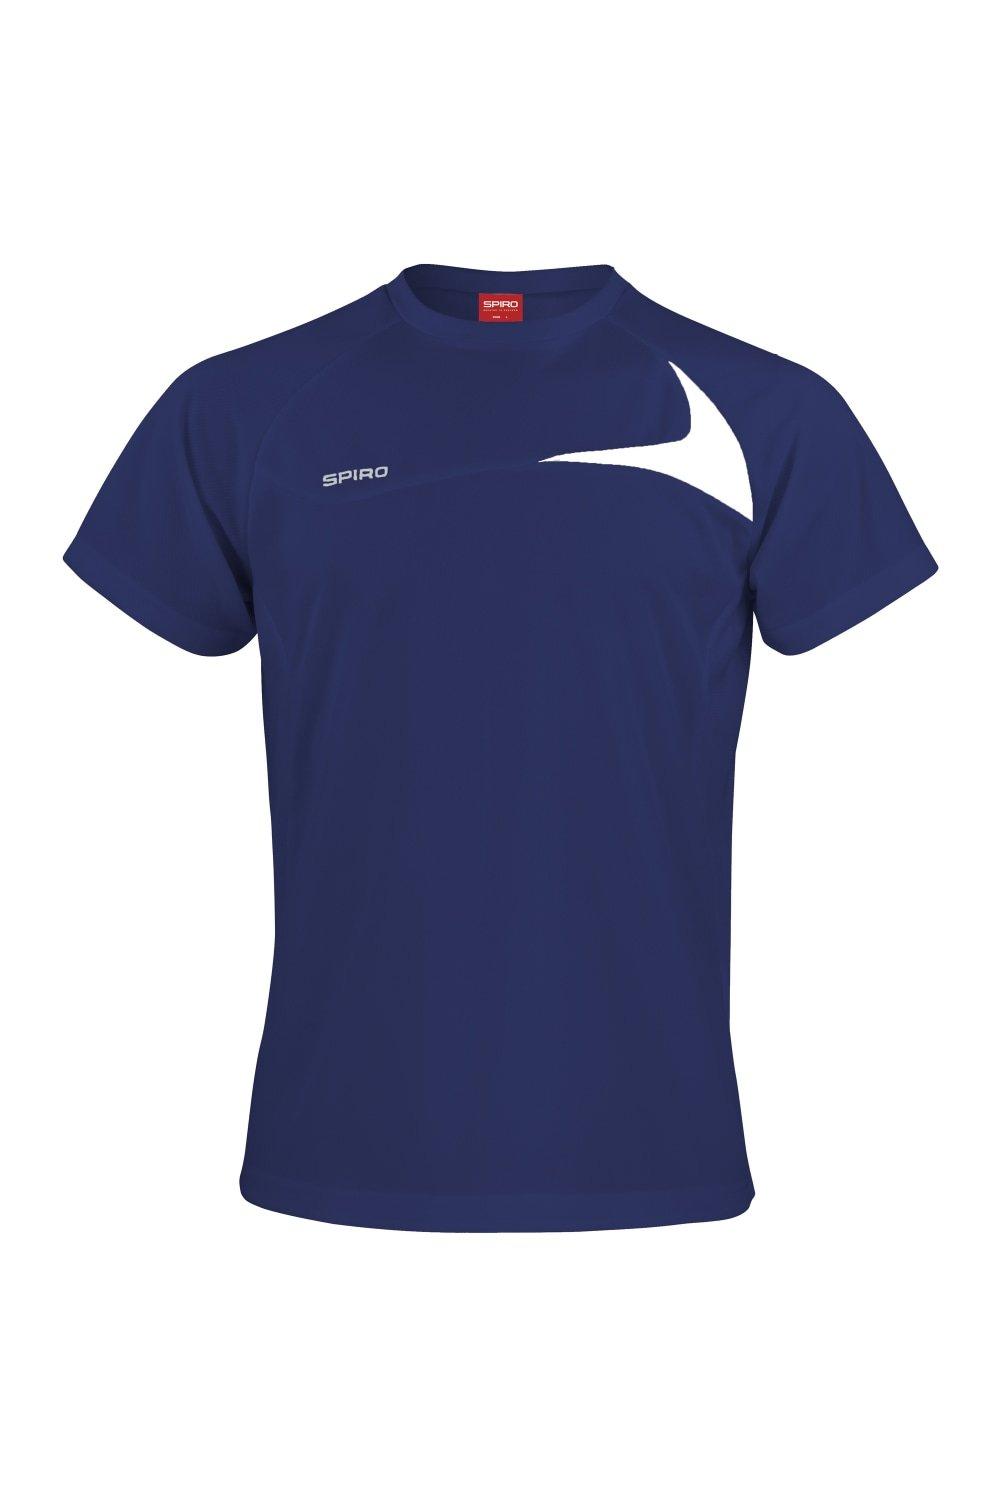 Спортивная рубашка Dash Performance для тренировок Spiro, темно-синий